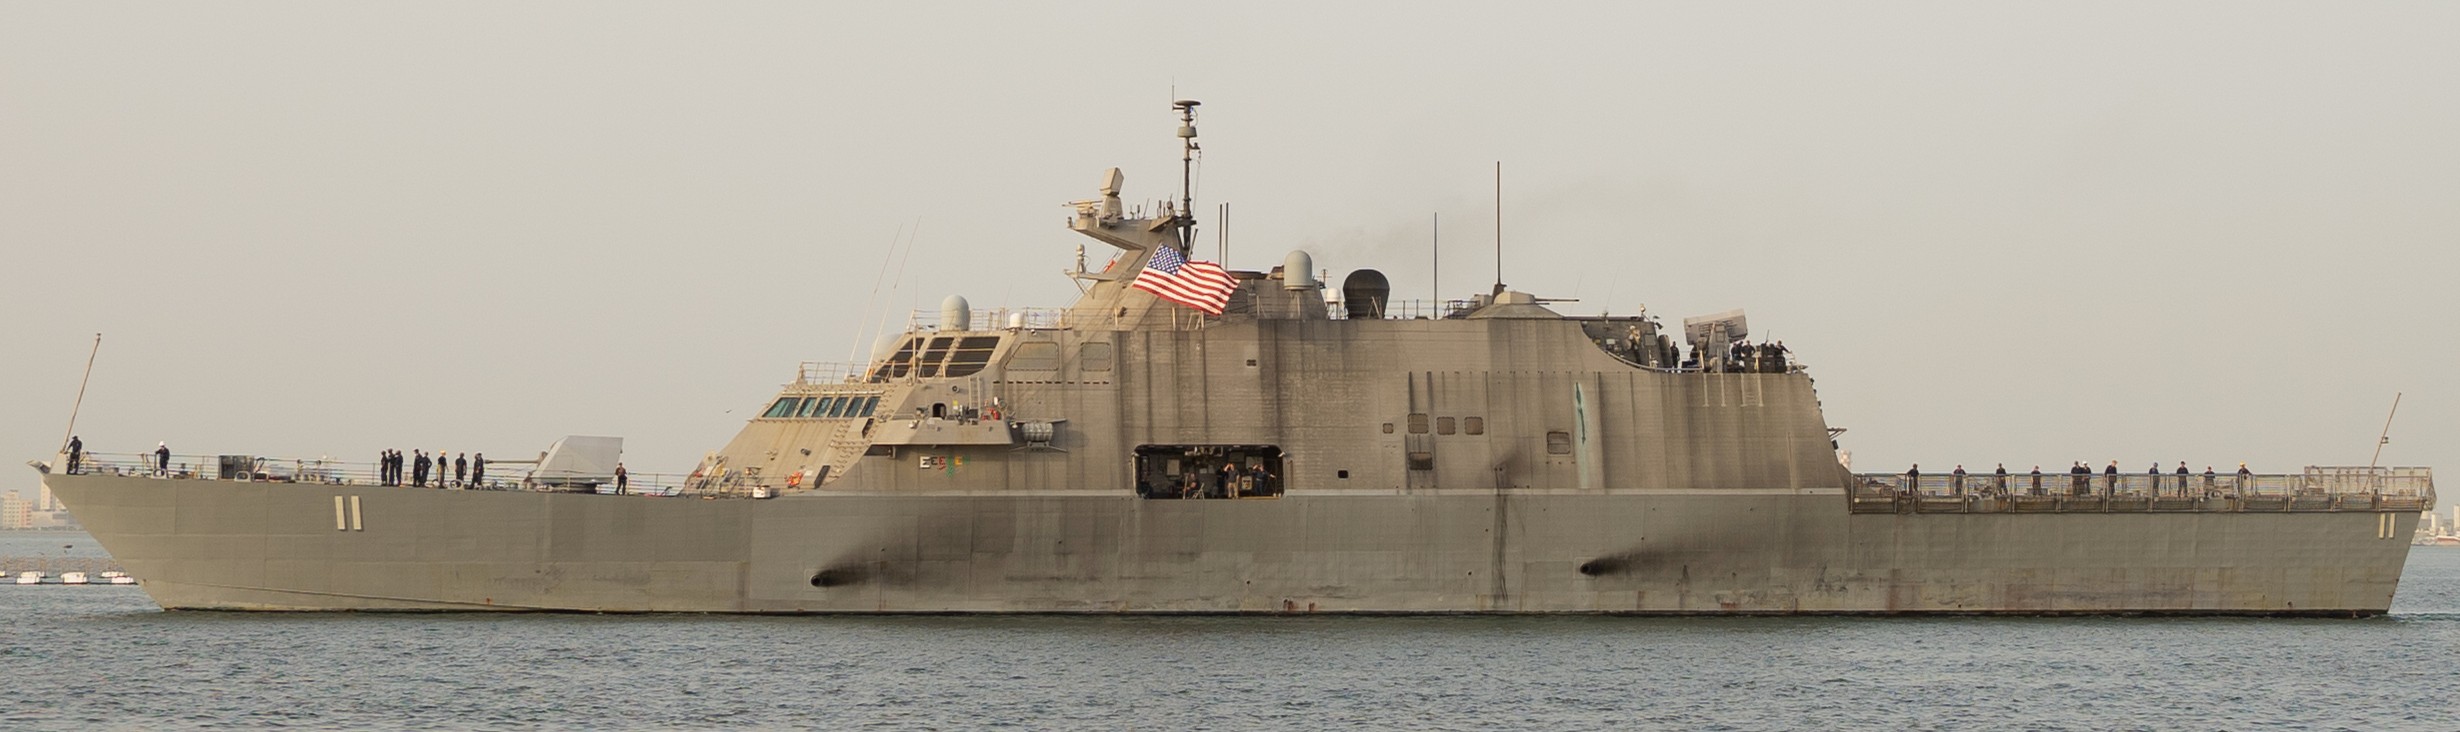 lcs-11 uss sioux city freedom class littoral combat ship us navy nsa bahrain manama 100